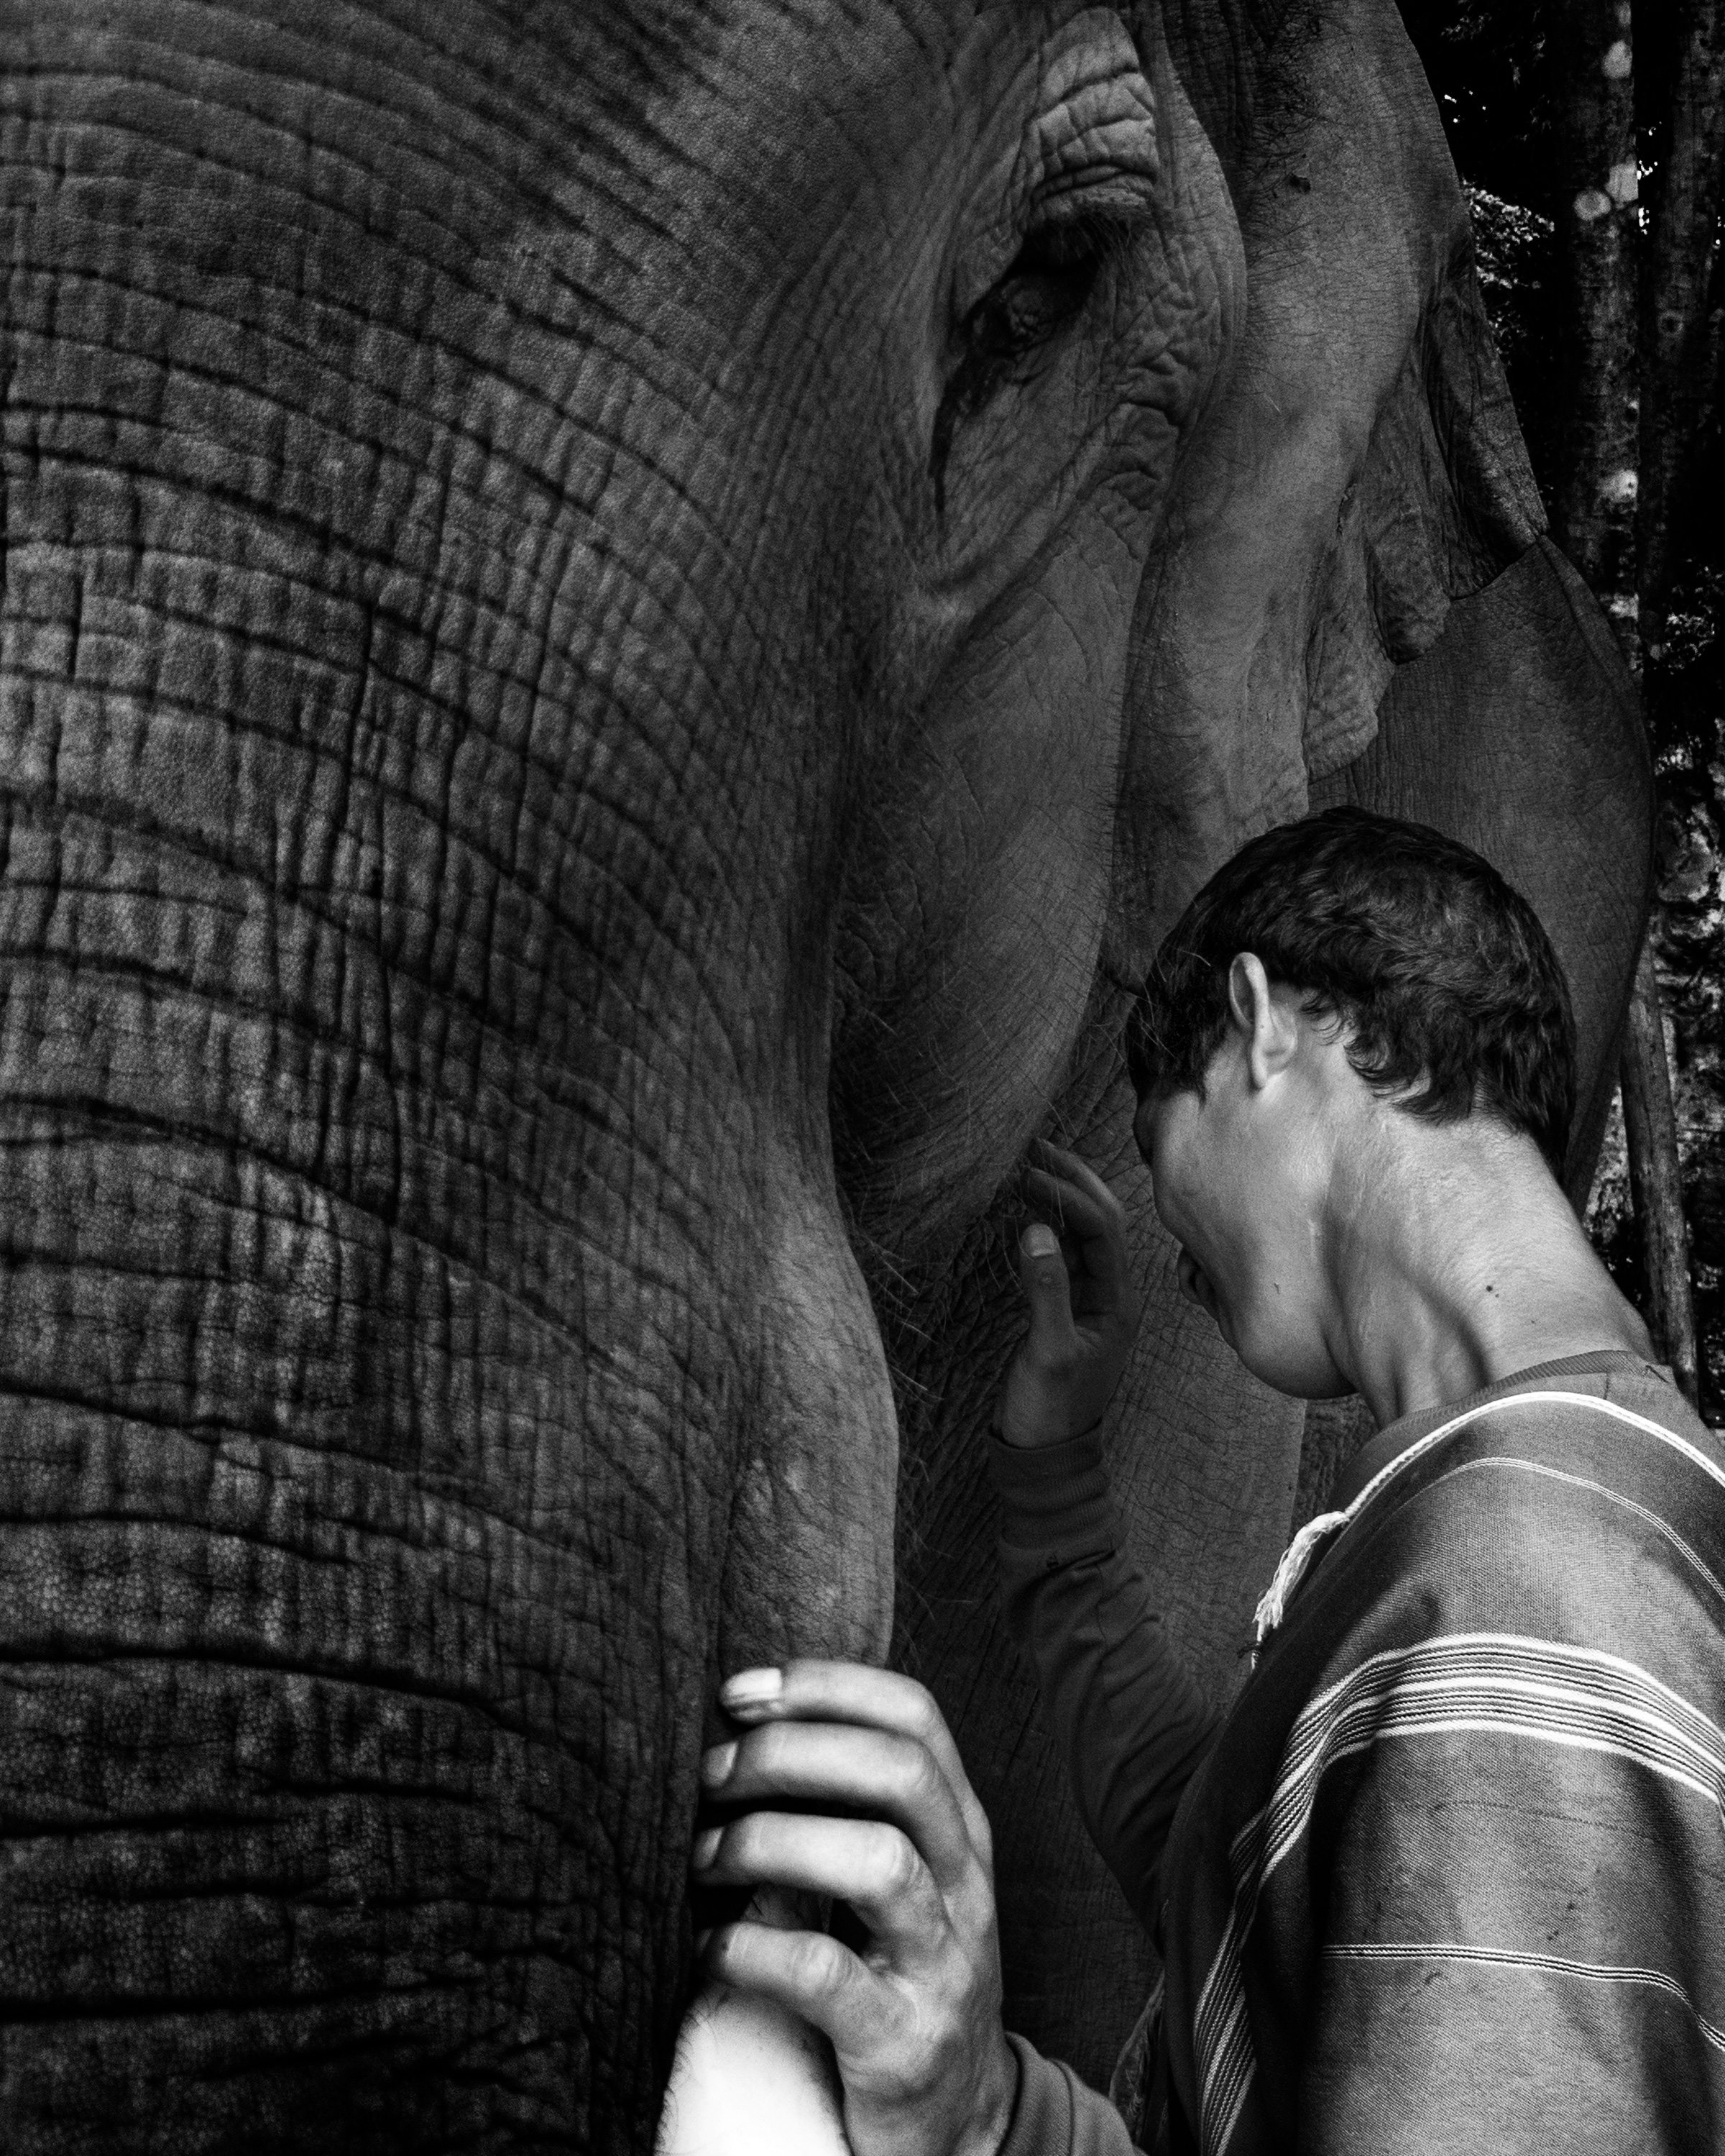 Boy and Elephant